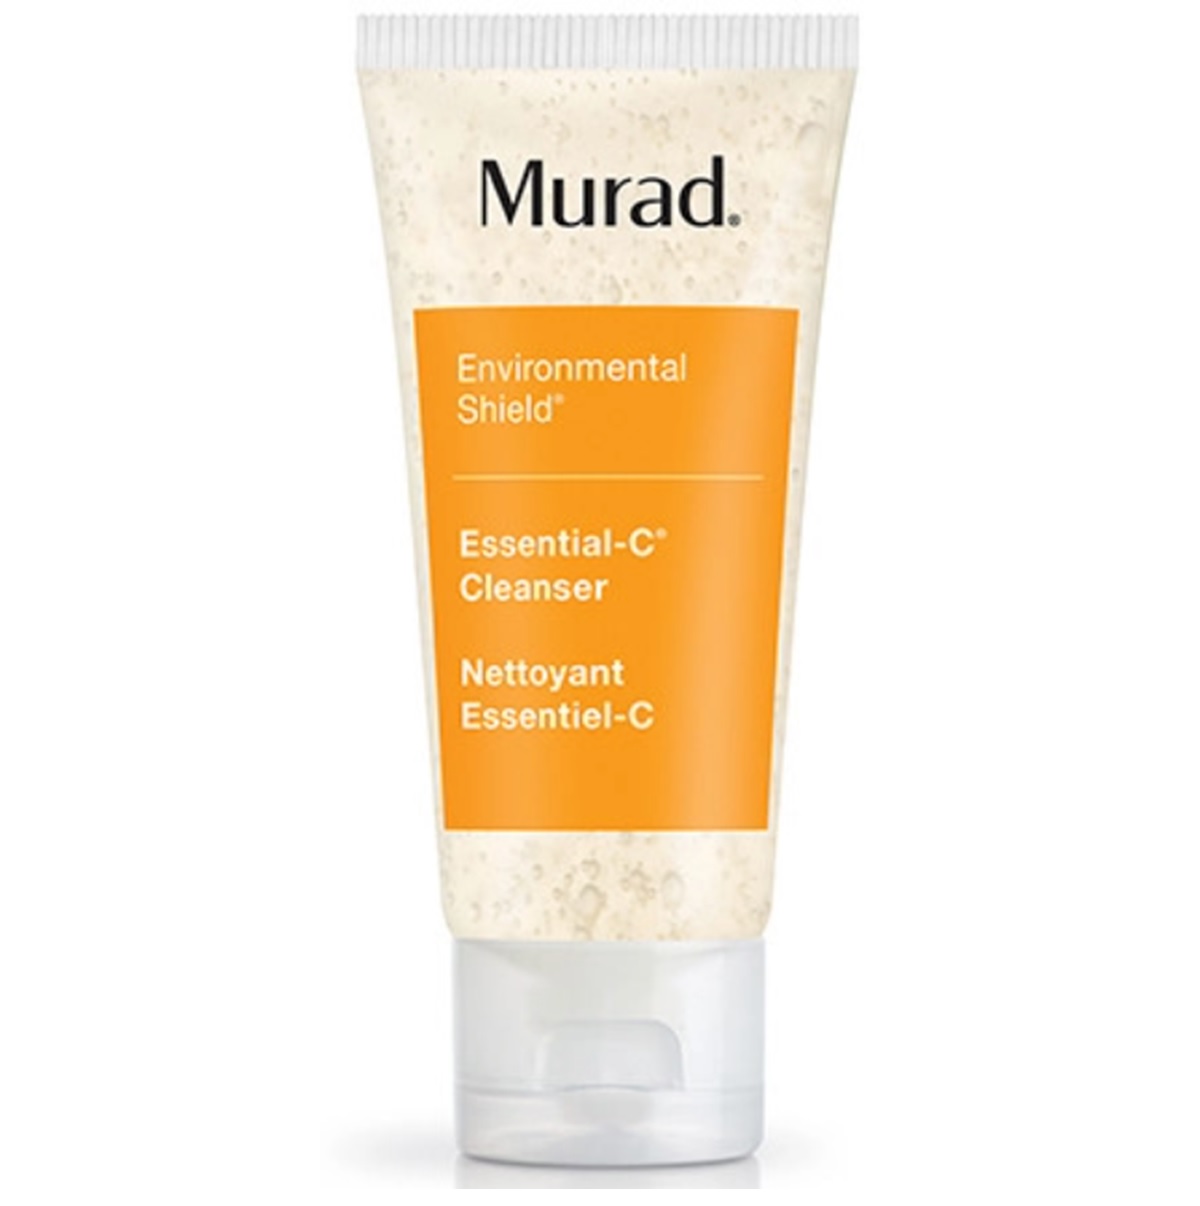 essential-c cleanser (limpiador facial)